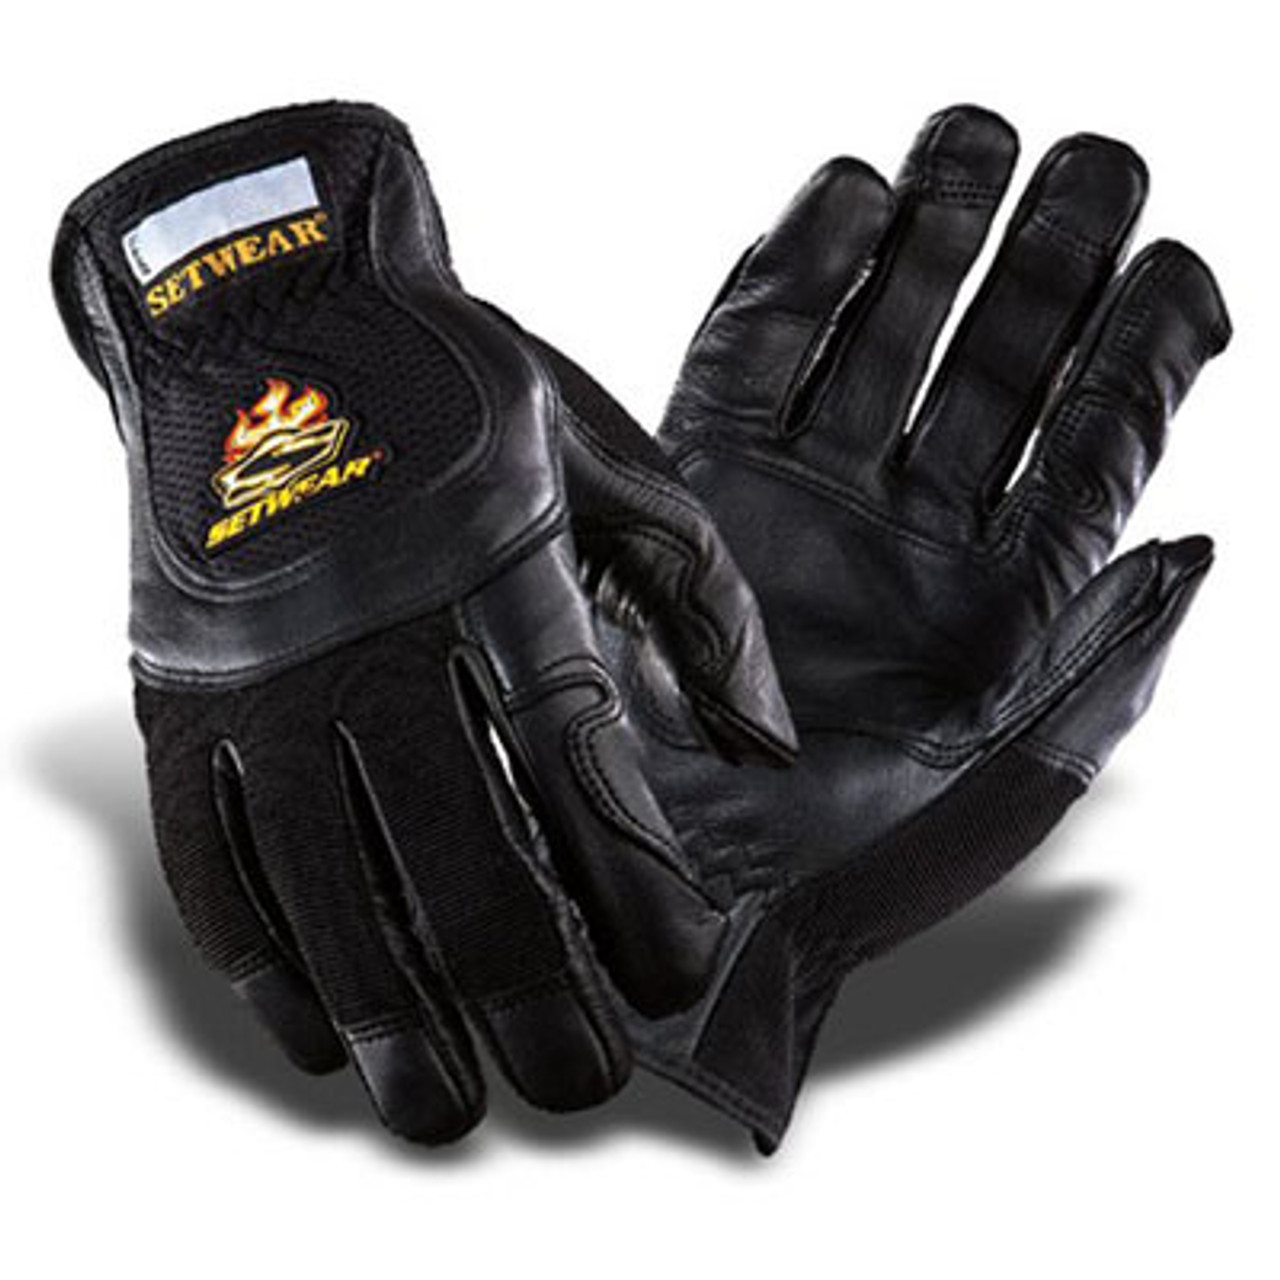 Setwear Pro Leather One Tough GloveTAN Gloves Size XXL 